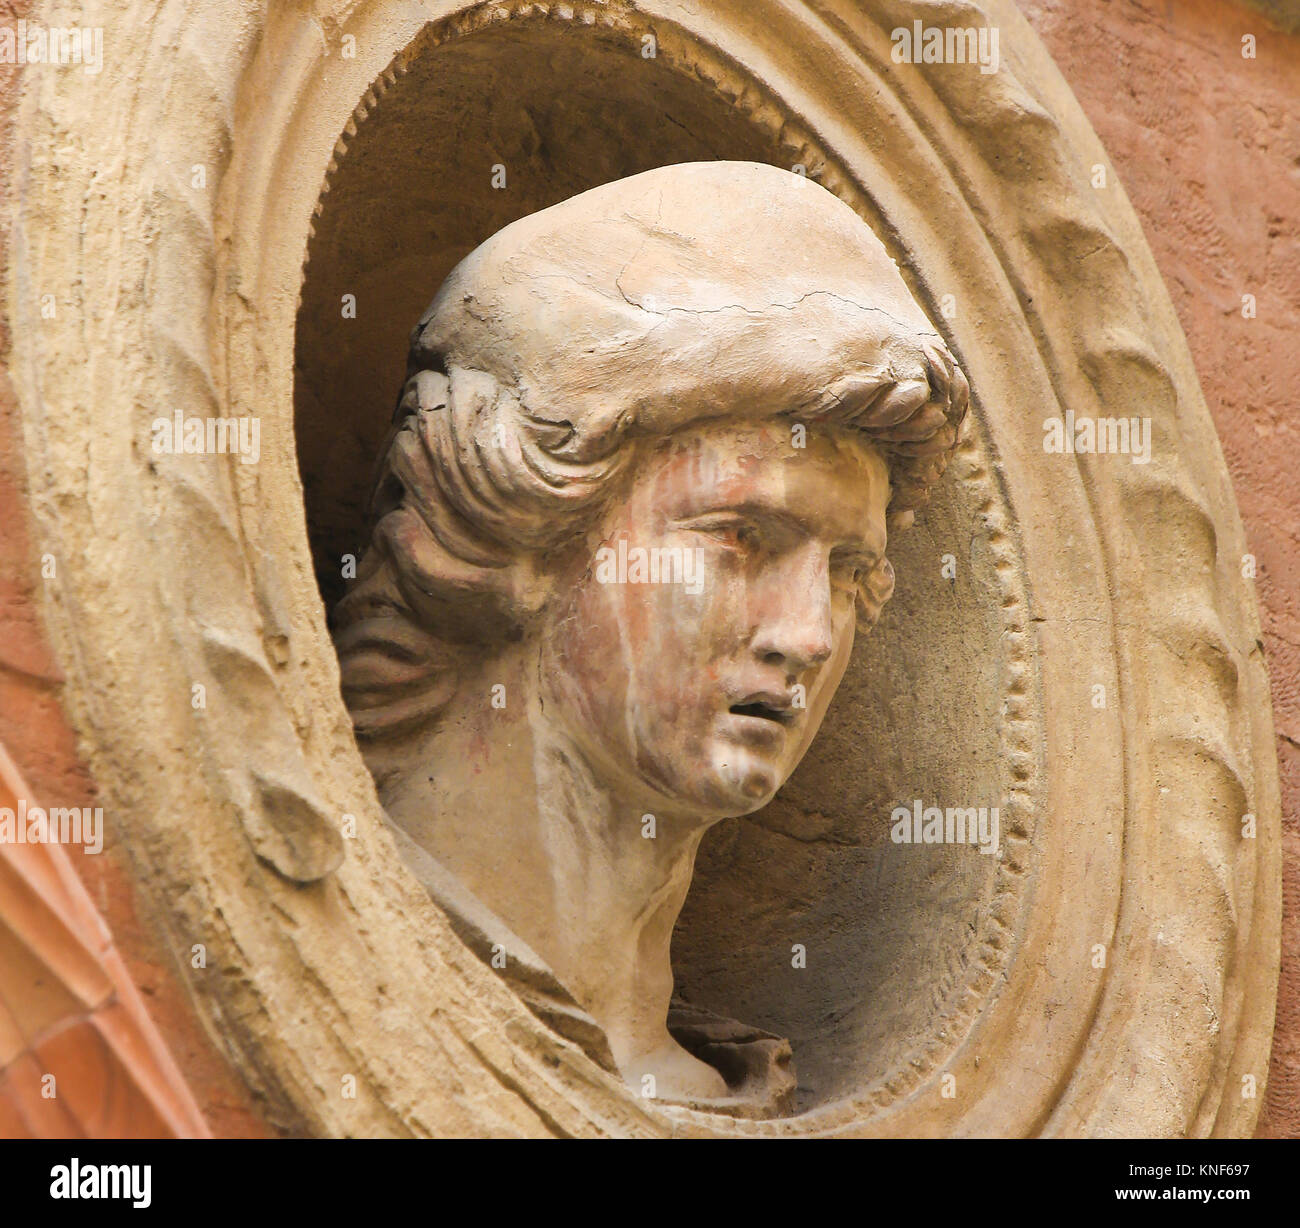 Bust at the Palazzo Bolognini Amorini Salina, a Renaissance architecture palace located on Piazza Santo Stefano in Bologna, Italy. Stock Photo